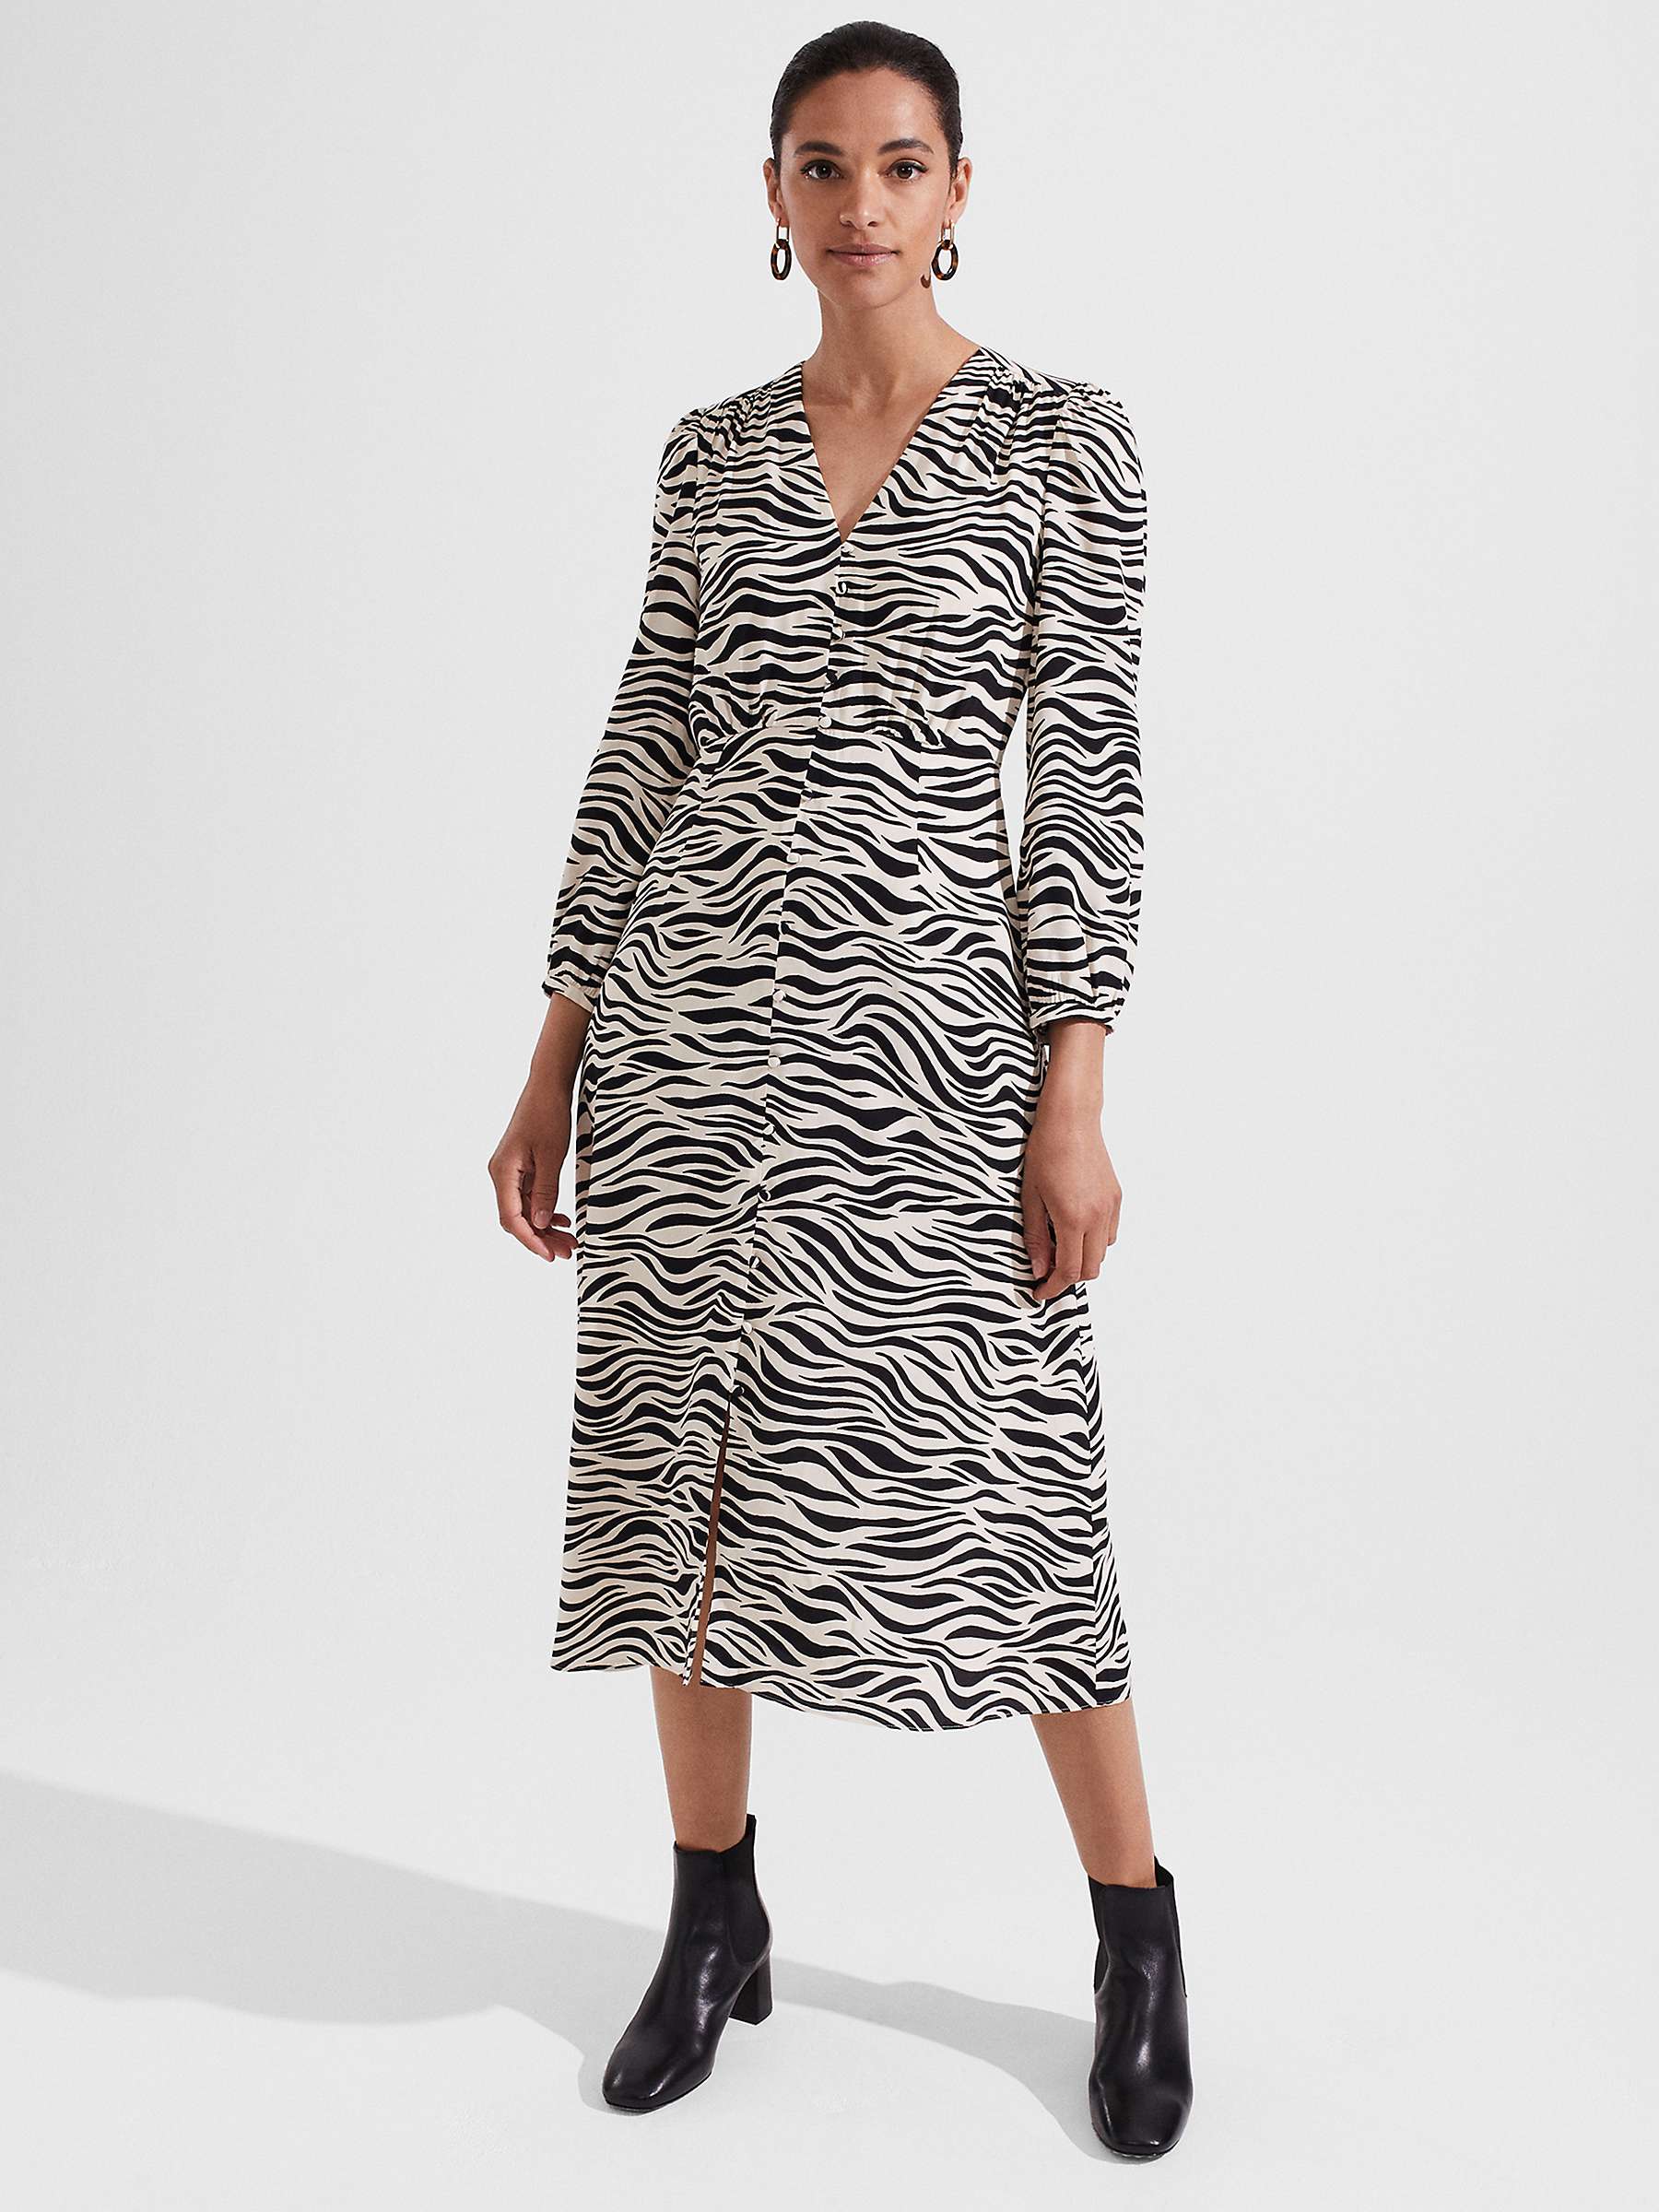 Hobbs Indria Zebra Print Dress, Cream/Black at John Lewis & Partners